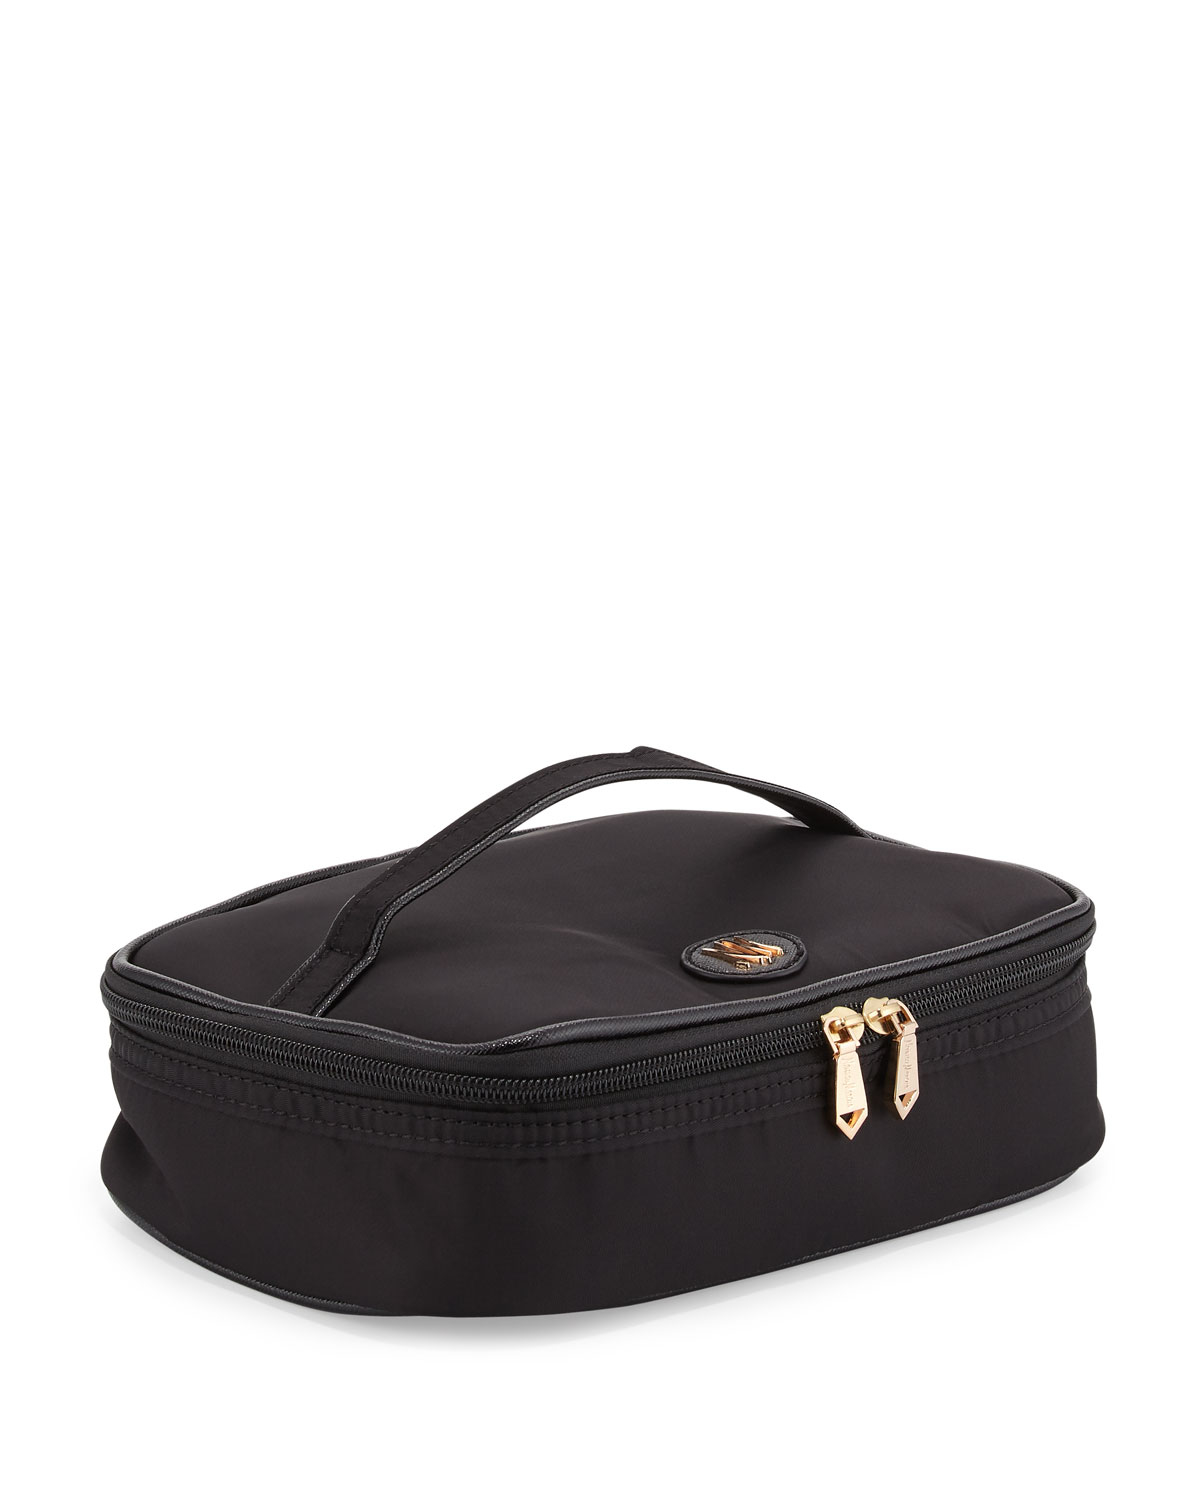 Lyst - Neiman Marcus Zip-around Nylon Makeup Train Travel Bag in Black for Men